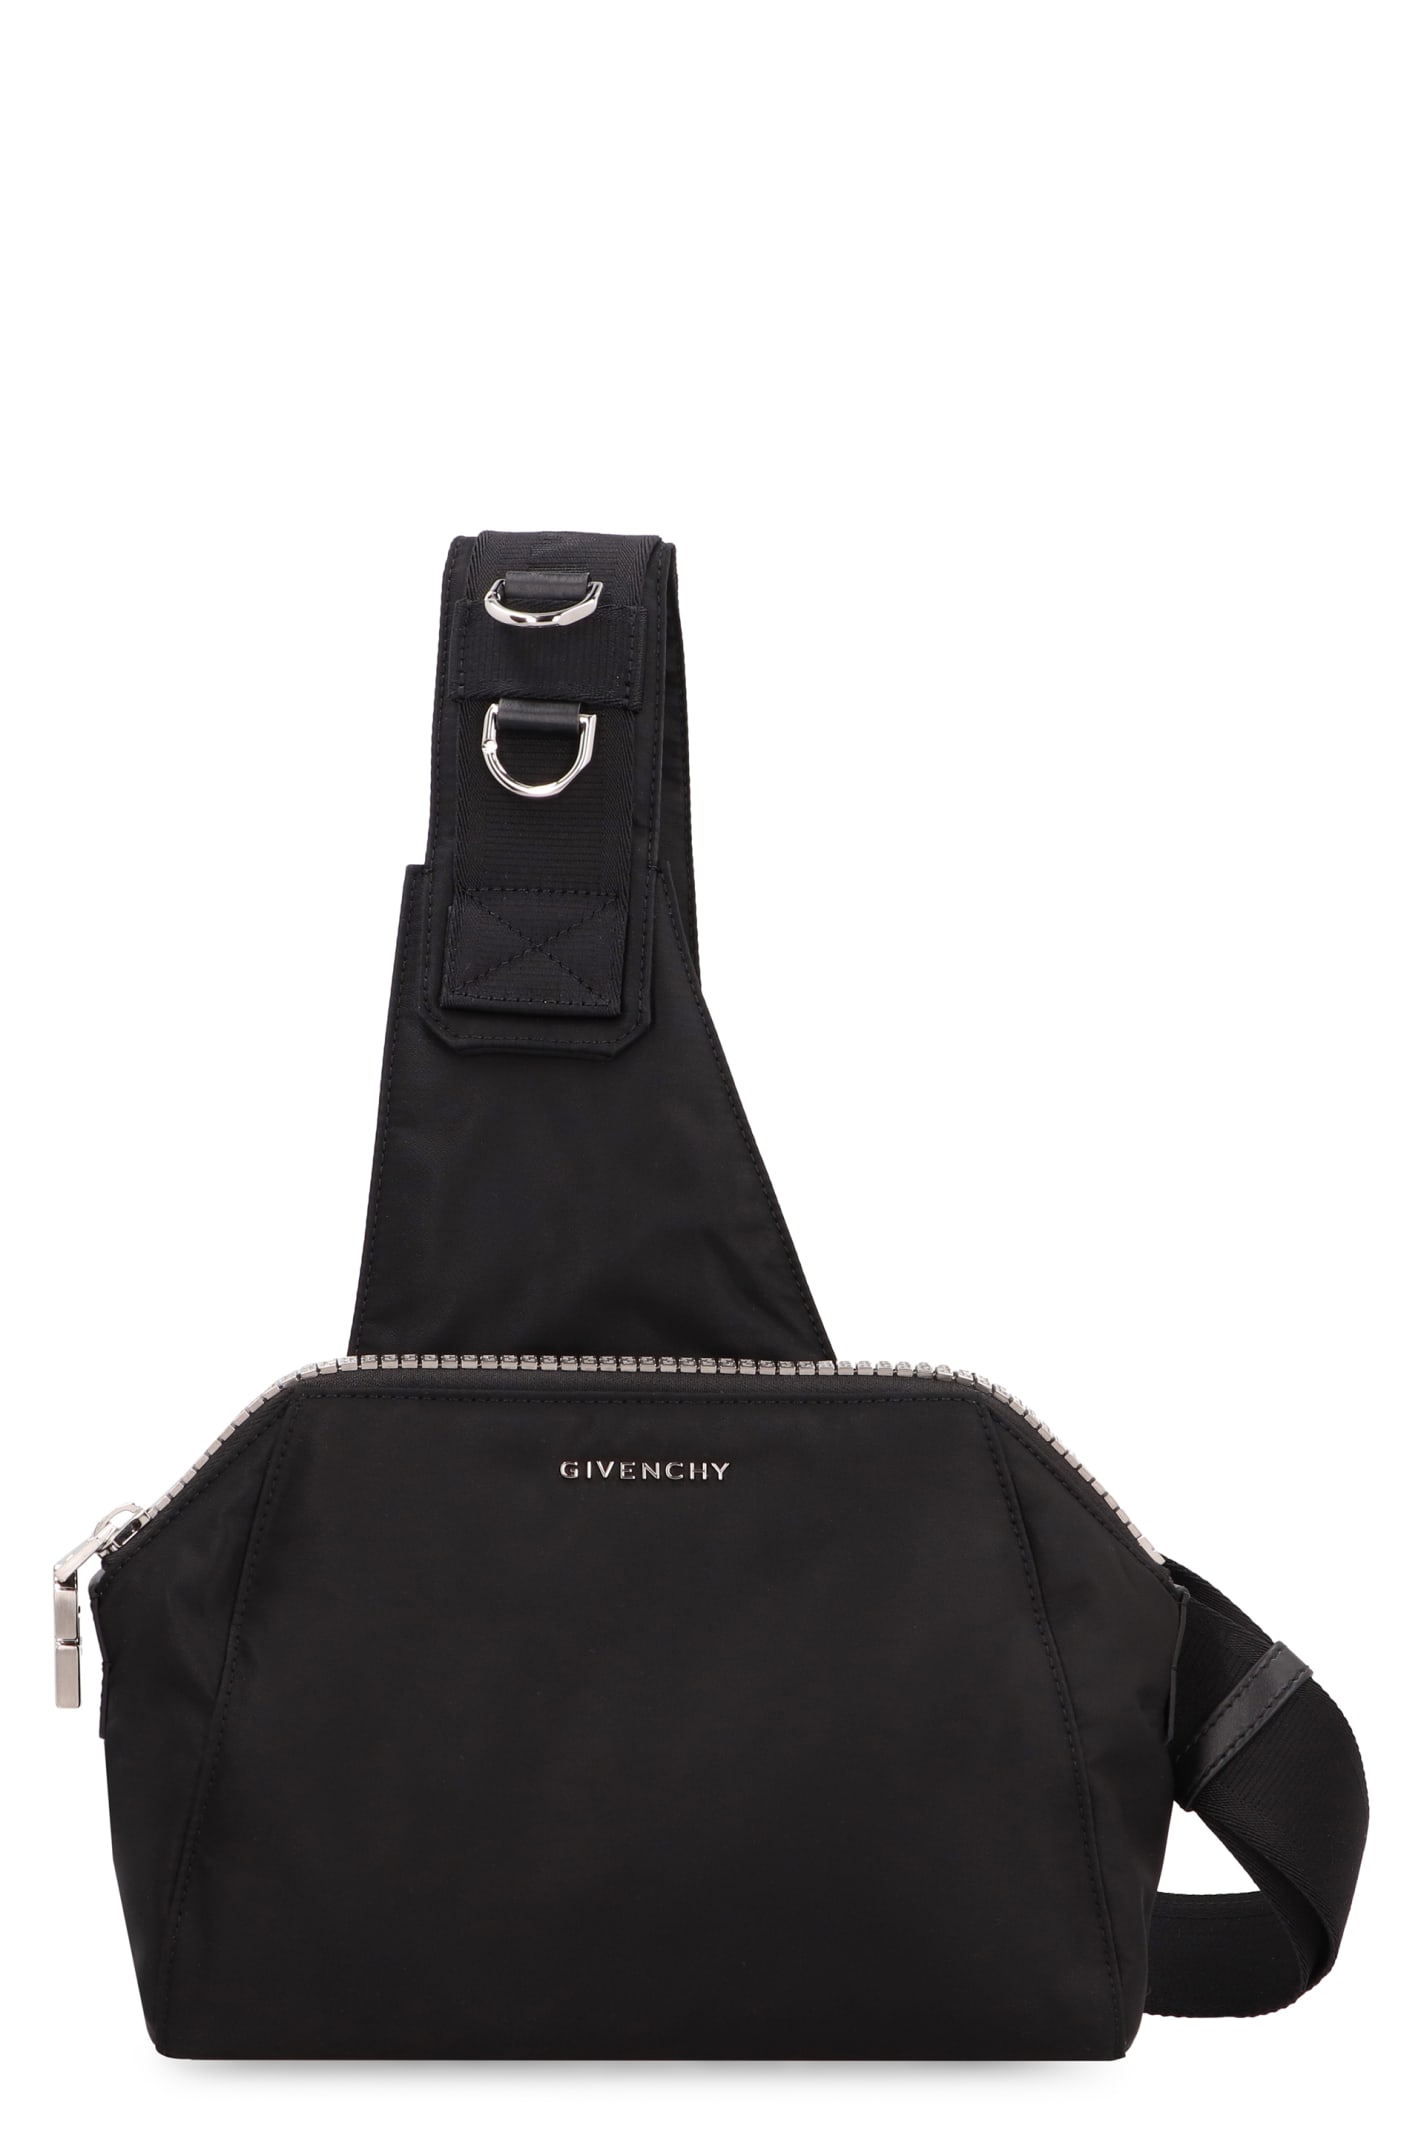 Givenchy Antigona Nylon And Leather Bag In Black